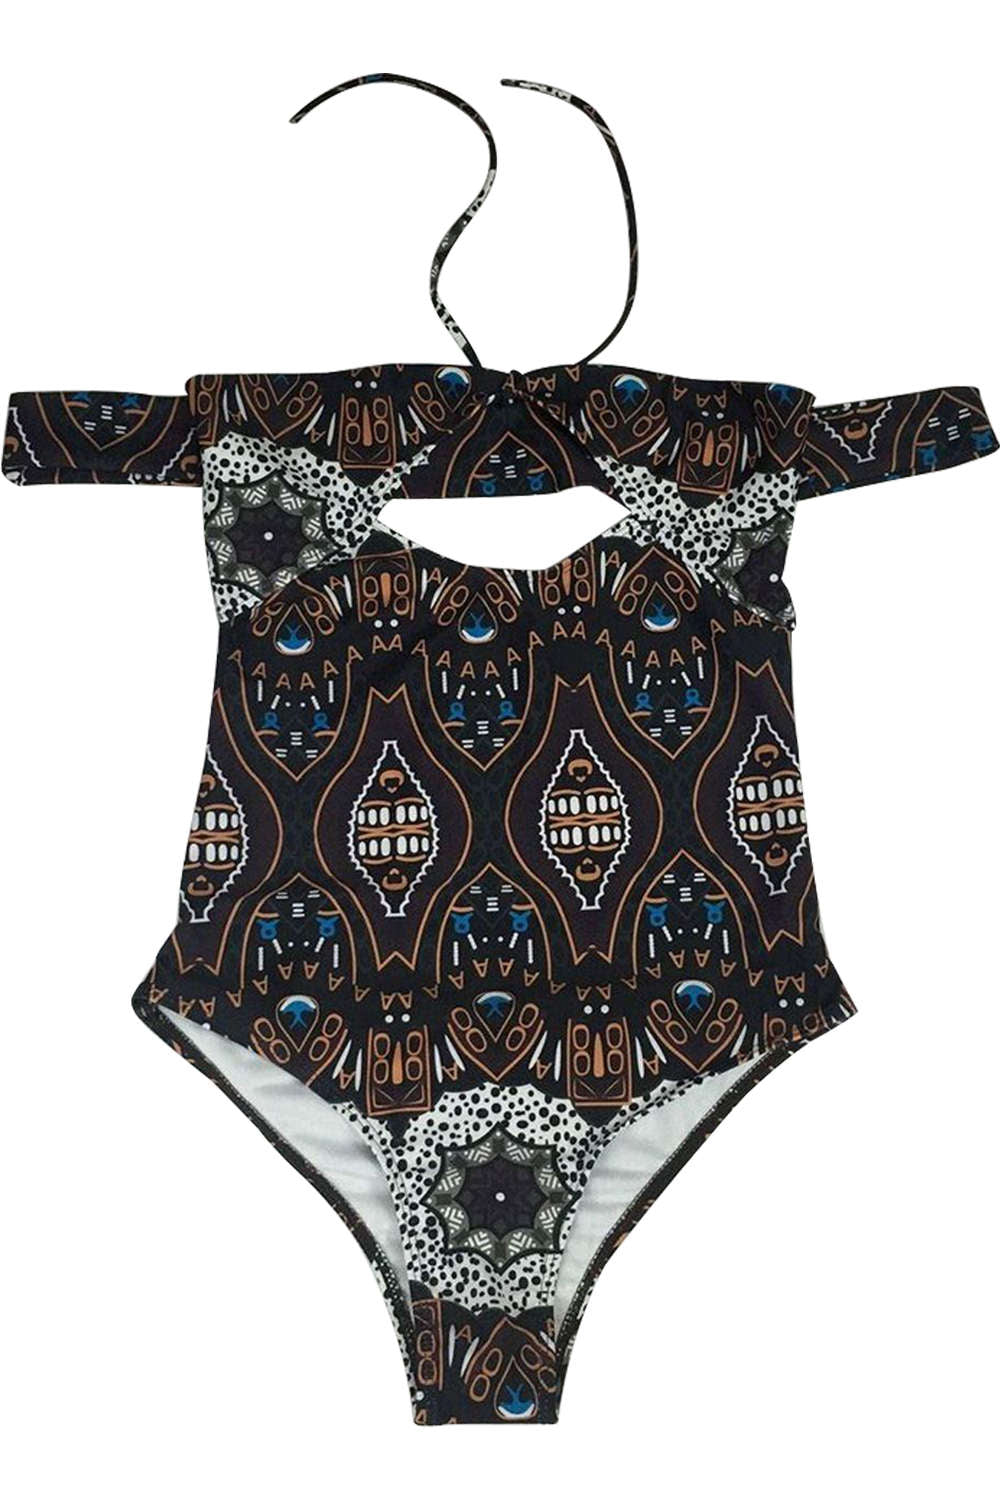 Iyasson Front Hollow Design Halter One-piece Swimsuit